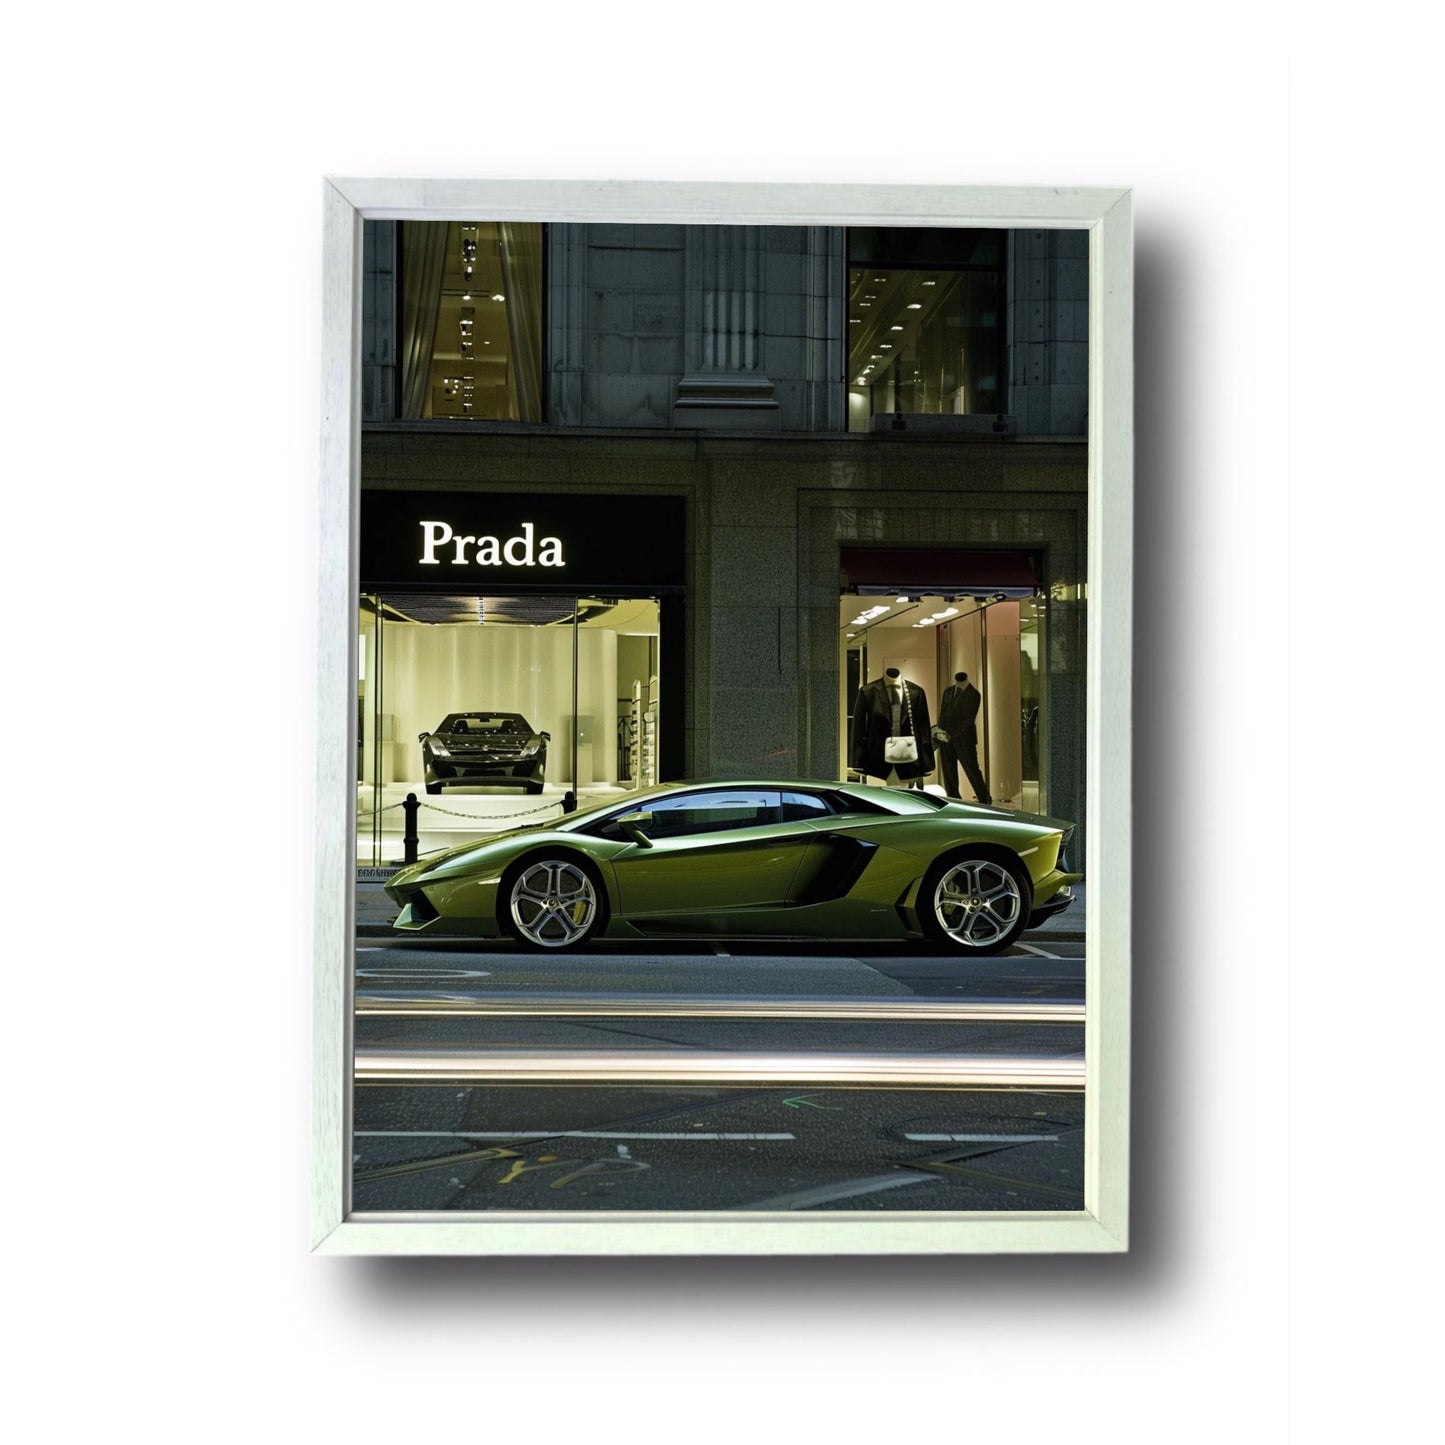 Green Lambo Front of Prada Store